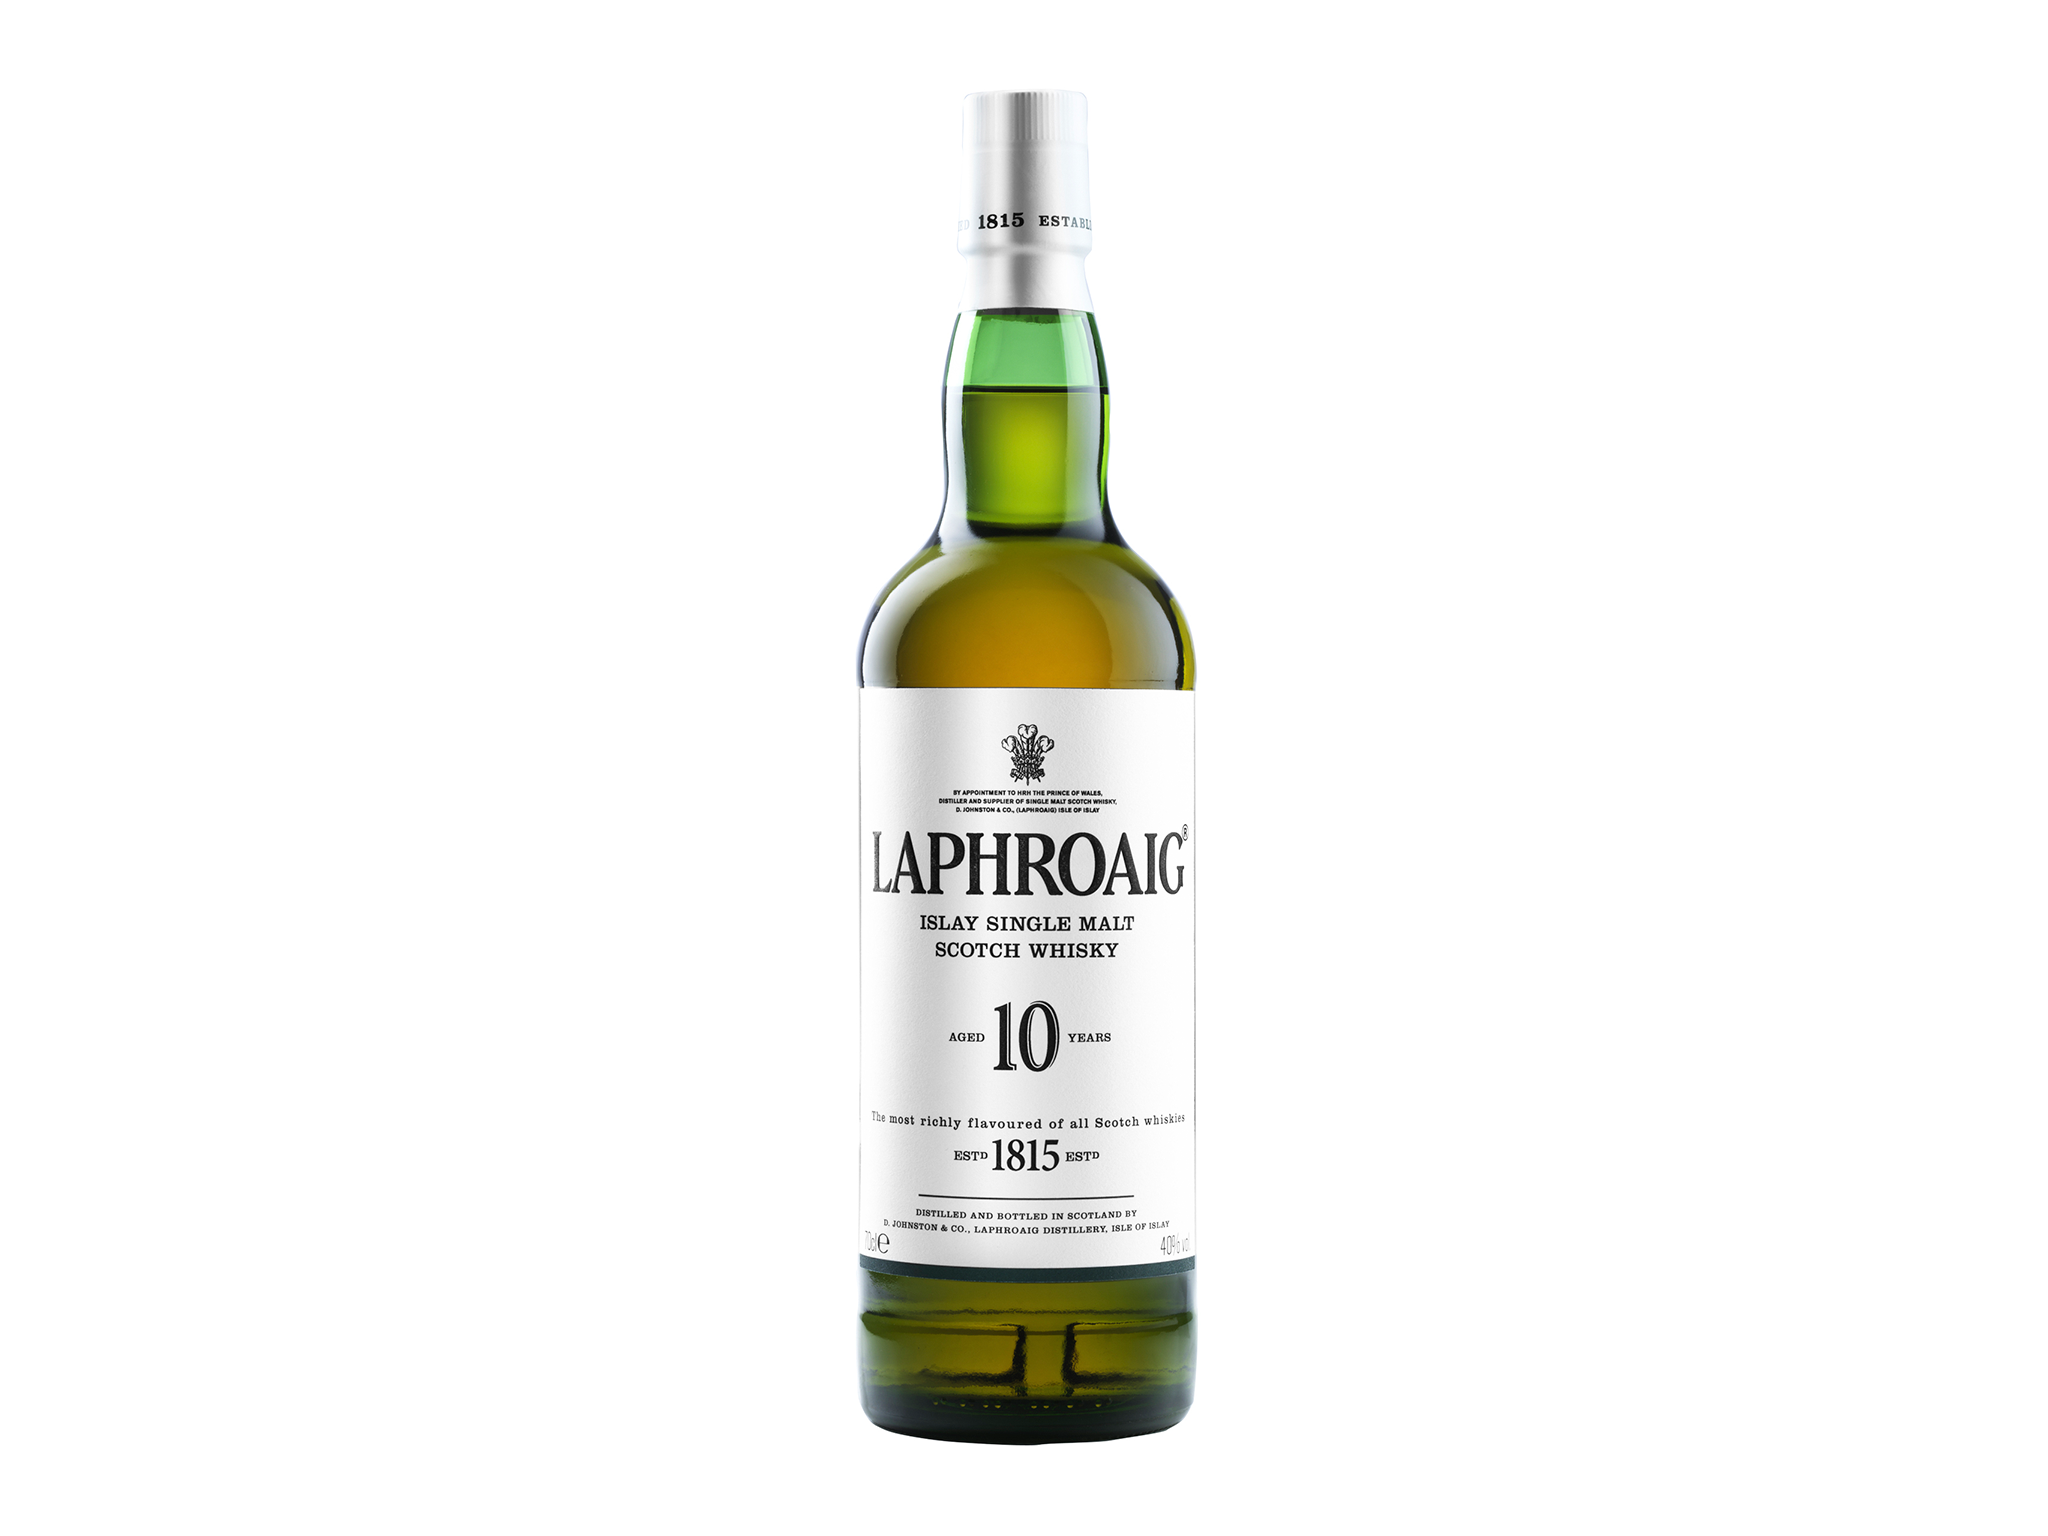 Laphroaig 10-year-old Islay single malt Scotch whisky